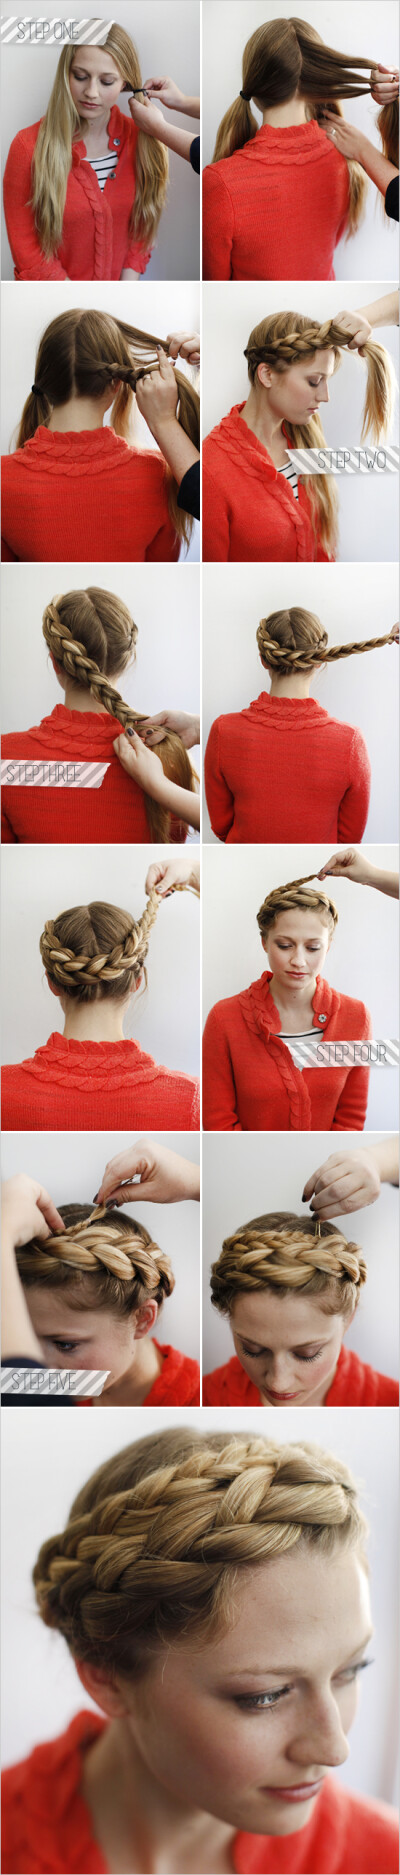 How to halo braid 花环式盘发http://www.weddingchicks.com/2012/03/27/how-to-halo-braid/